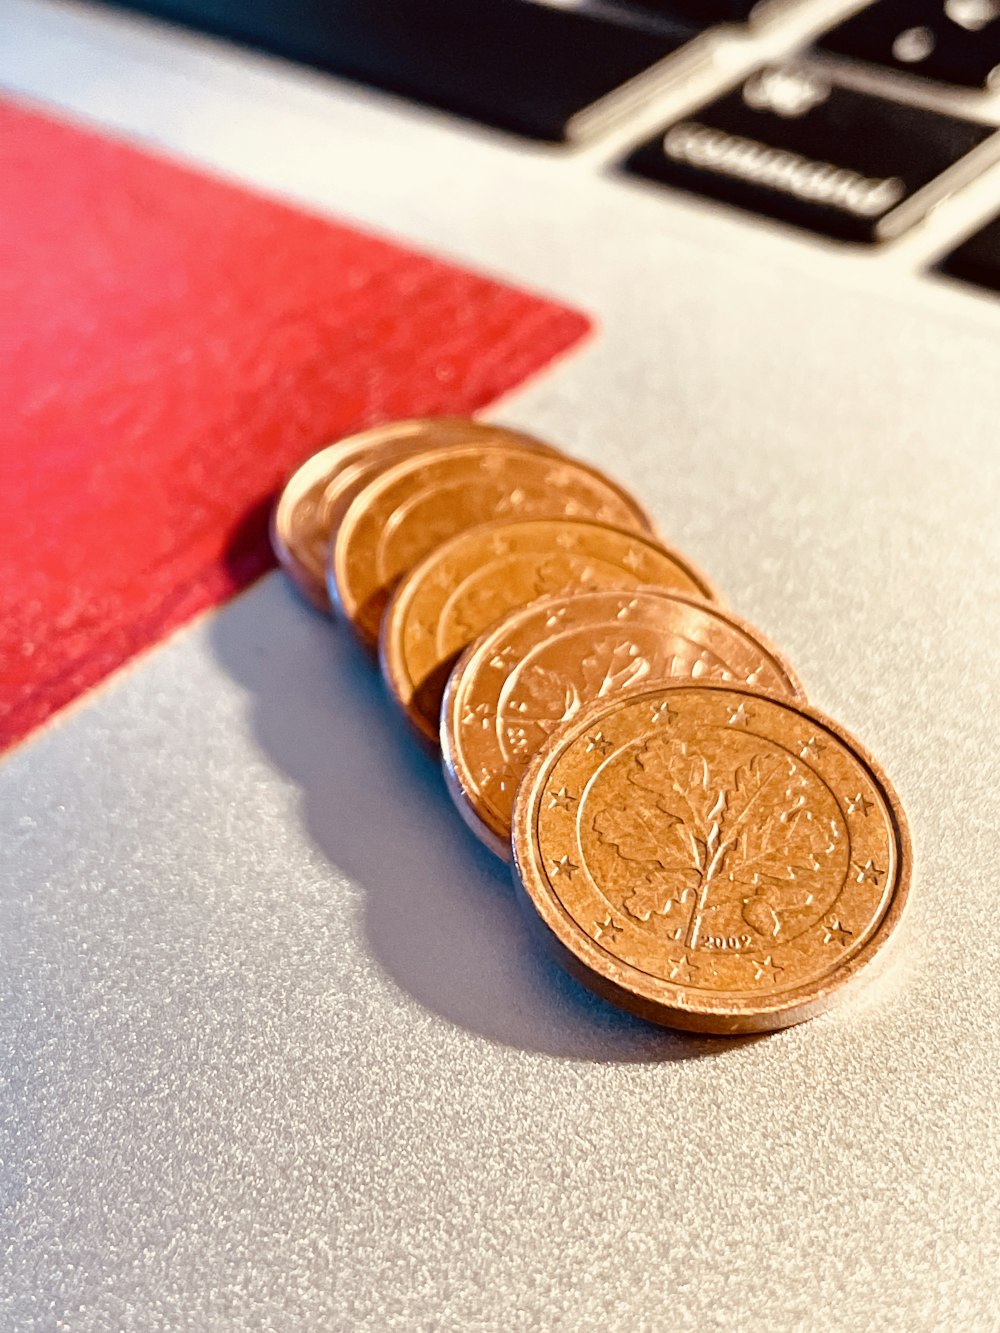 Una pila de monedas encima de una computadora portátil